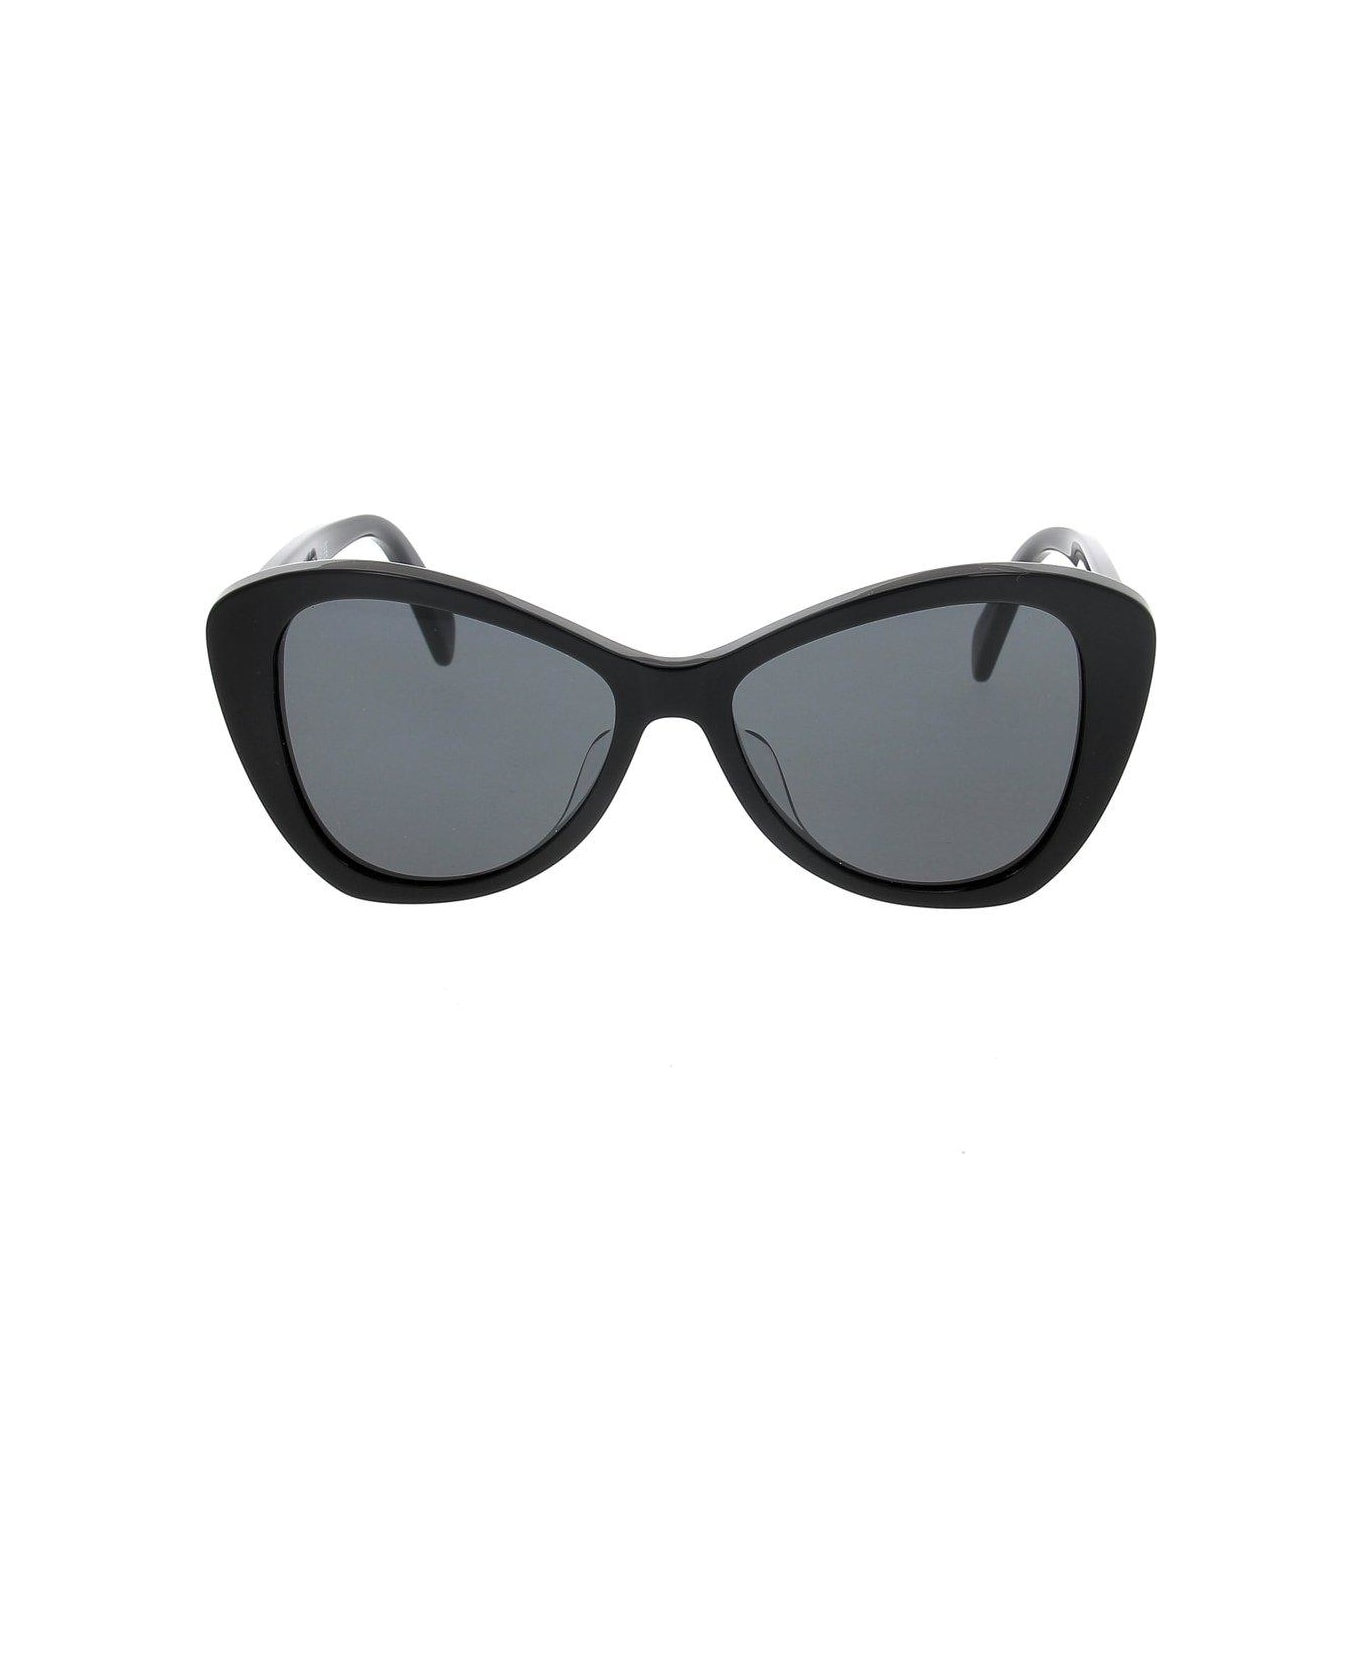 Celine Butterfly Frame Sunglasses - 01a サングラス